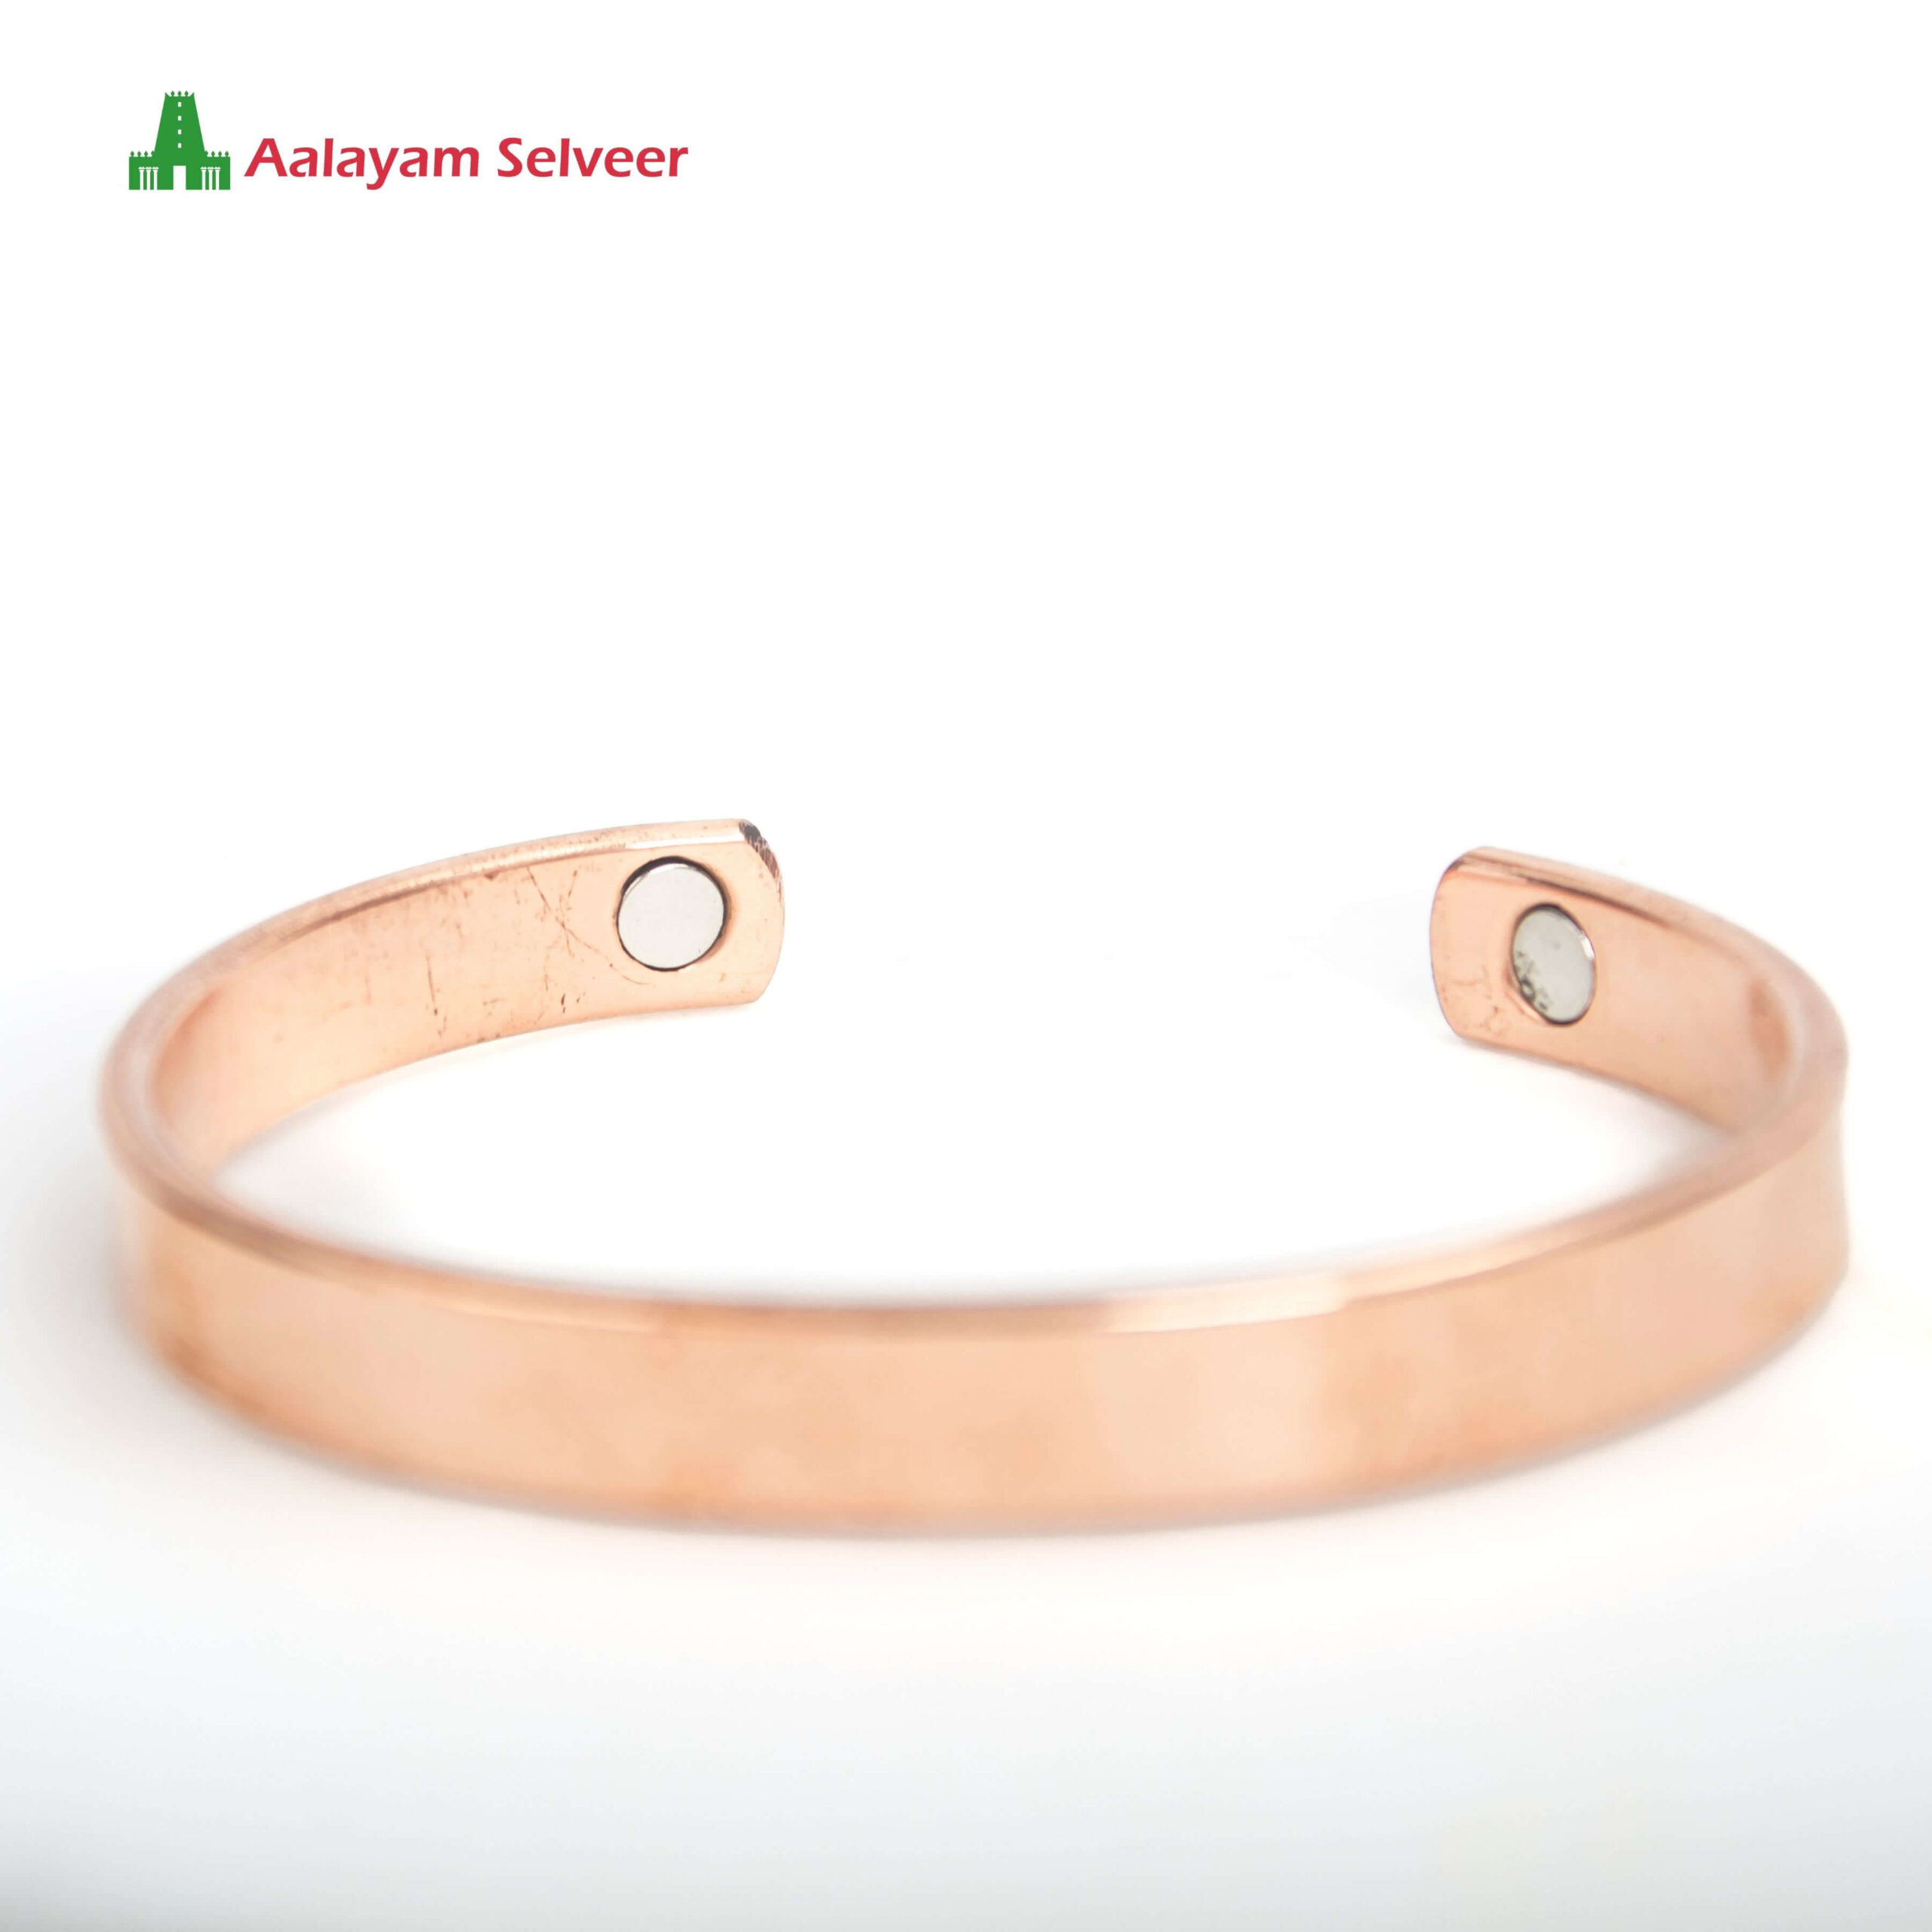 Buy Woven Copper Bracelet for Men or Women Online in India - Etsy